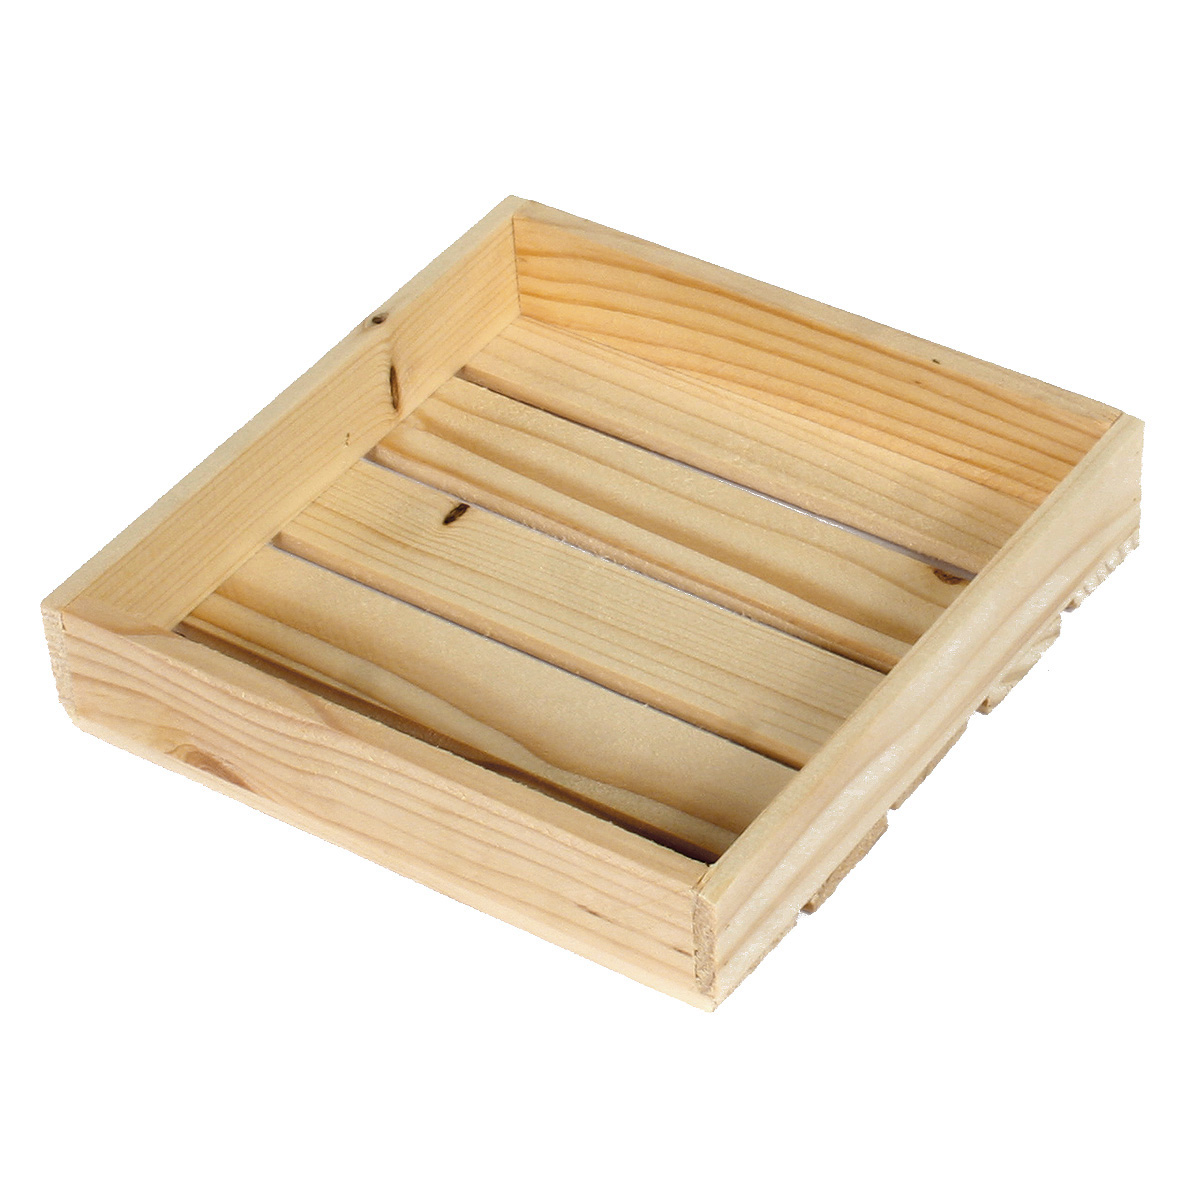 Коробка деревянная Grand Gift 402 поддон 16,5х16,5х1,8 см коробка пенал подарочная деревянная 20×14×8 см